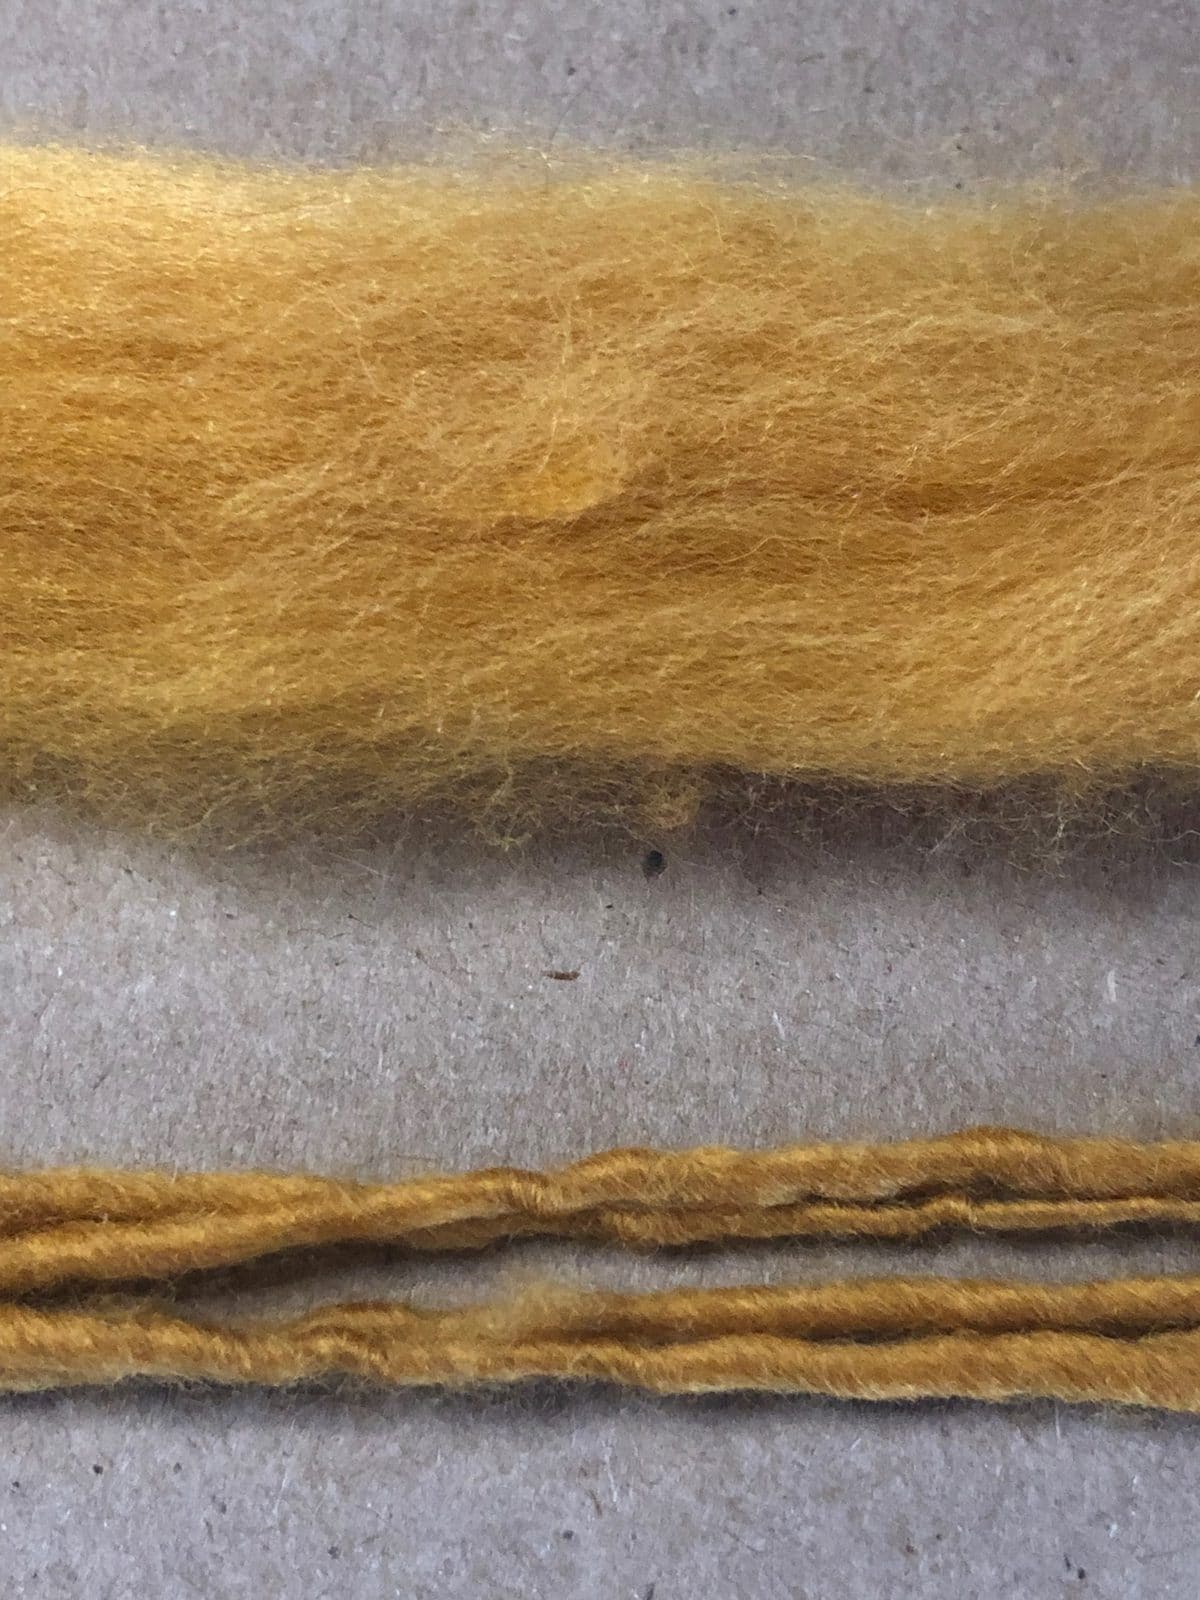 image description: above, unspun fibre, below, a few strands of a singles yarn spun from that fibre